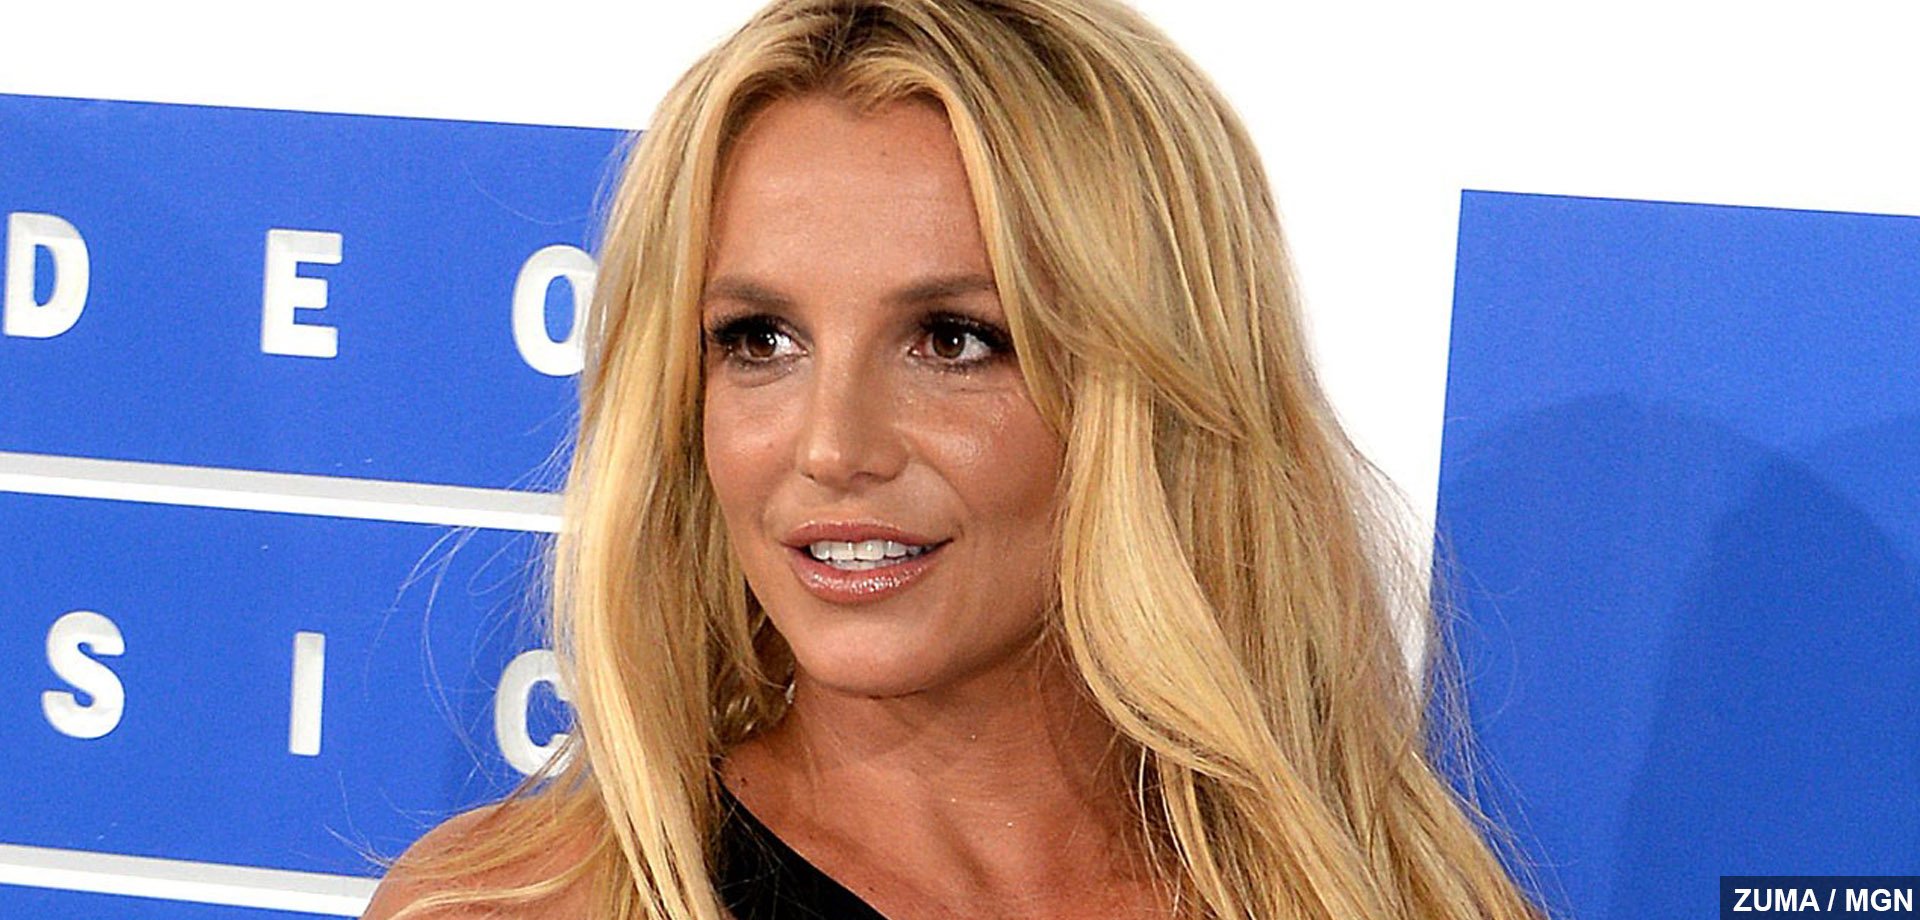 Porno britney spear Britney Spears